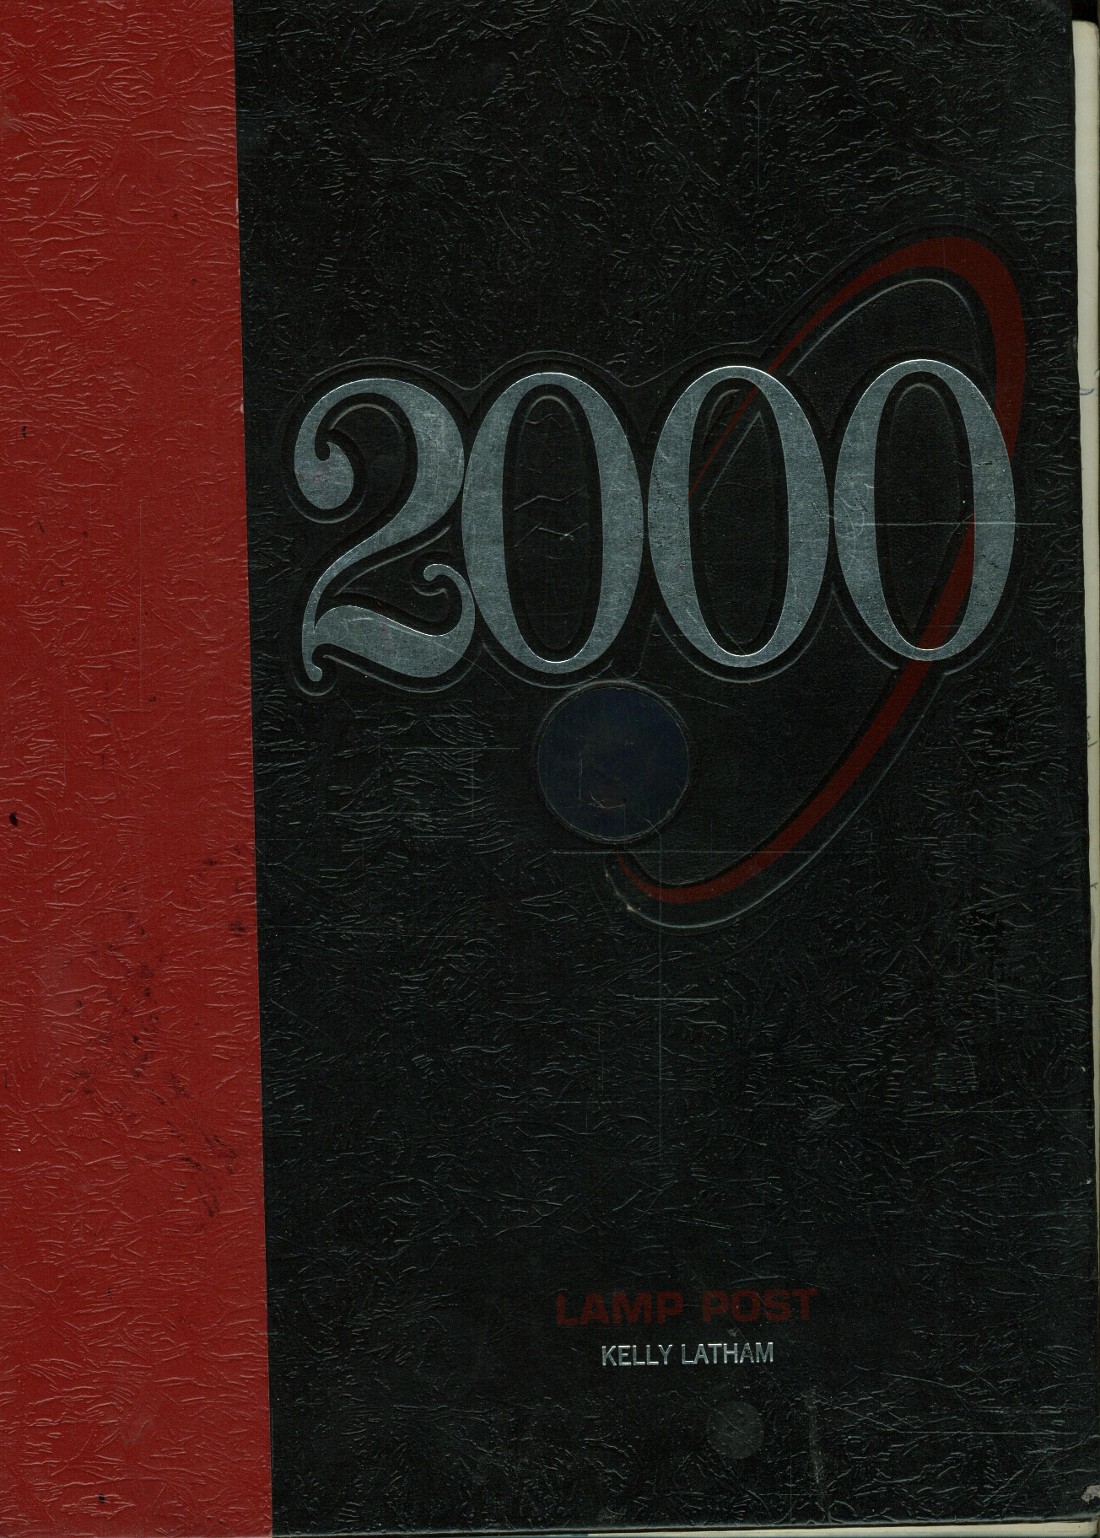 2000 yearbook from Kearny High School from Kearny, New Jersey for sale